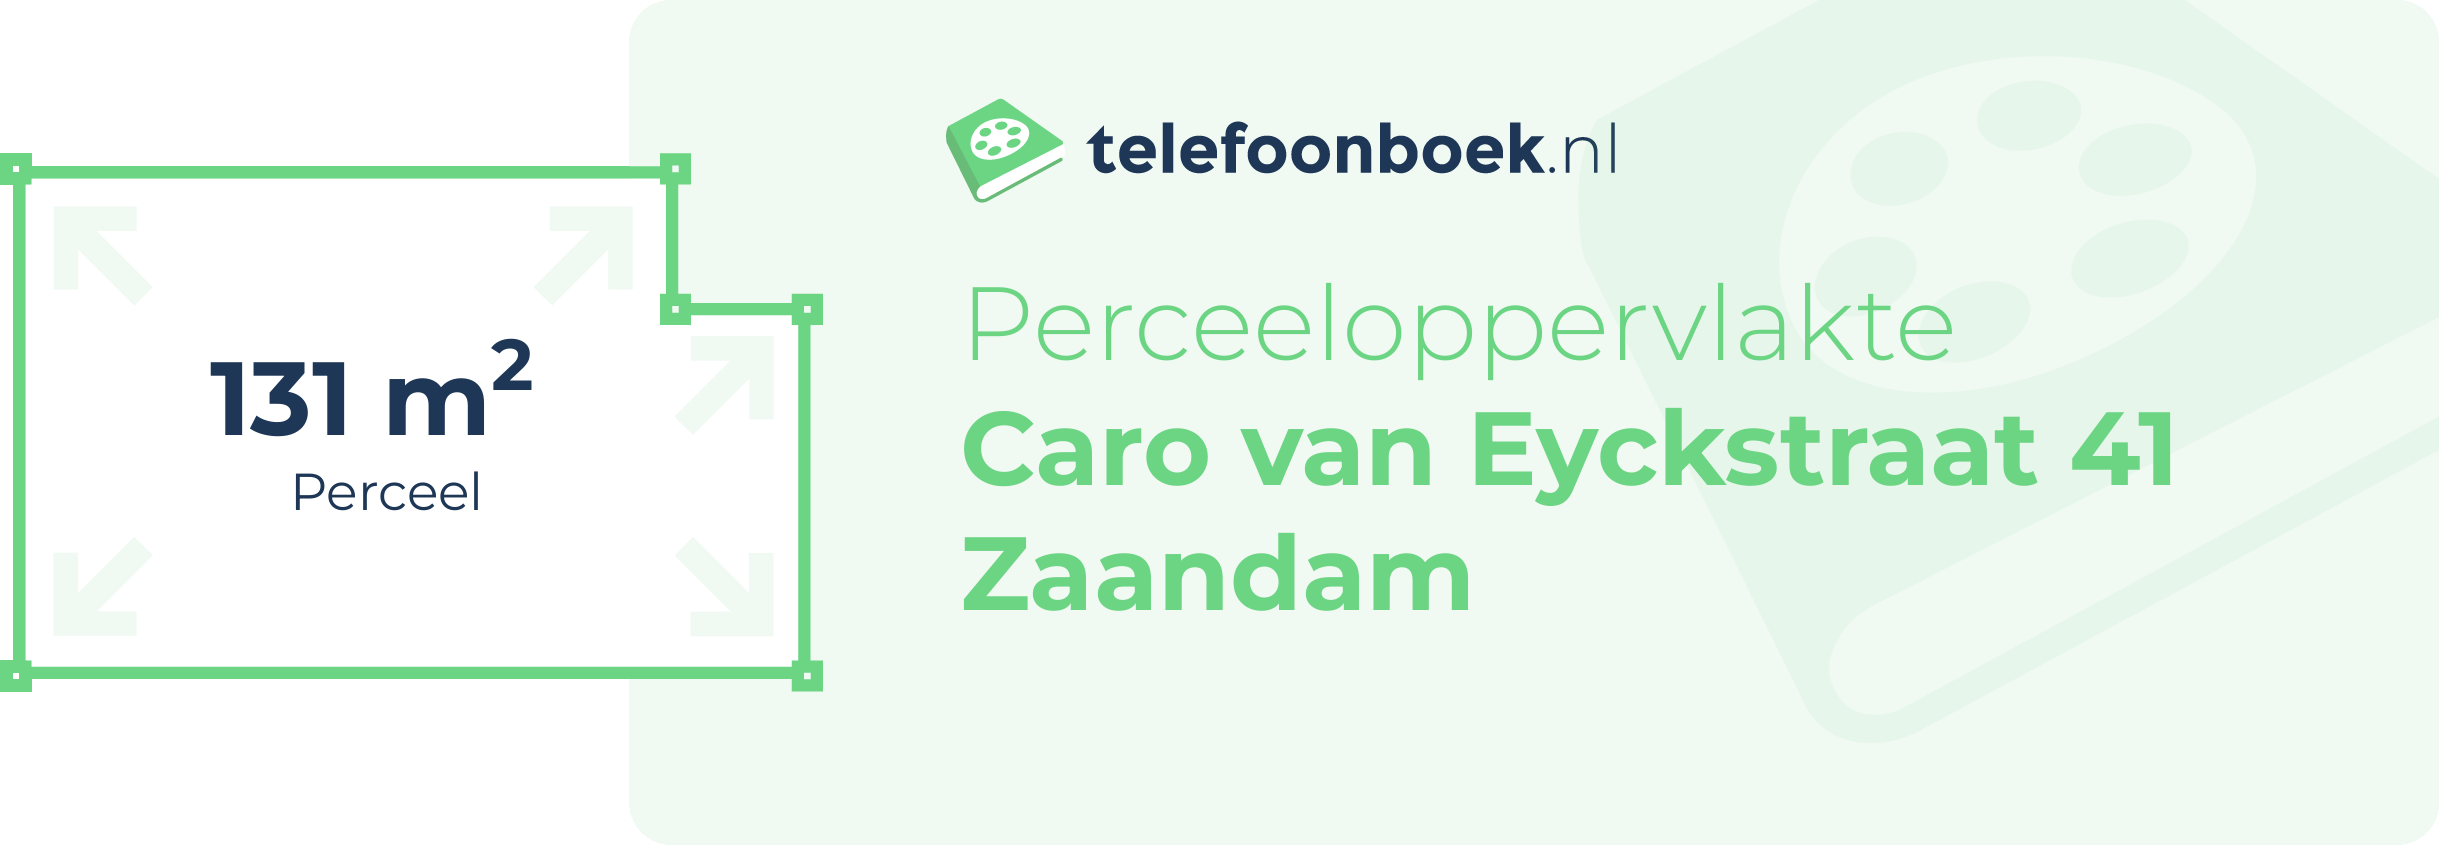 Perceeloppervlakte Caro Van Eyckstraat 41 Zaandam